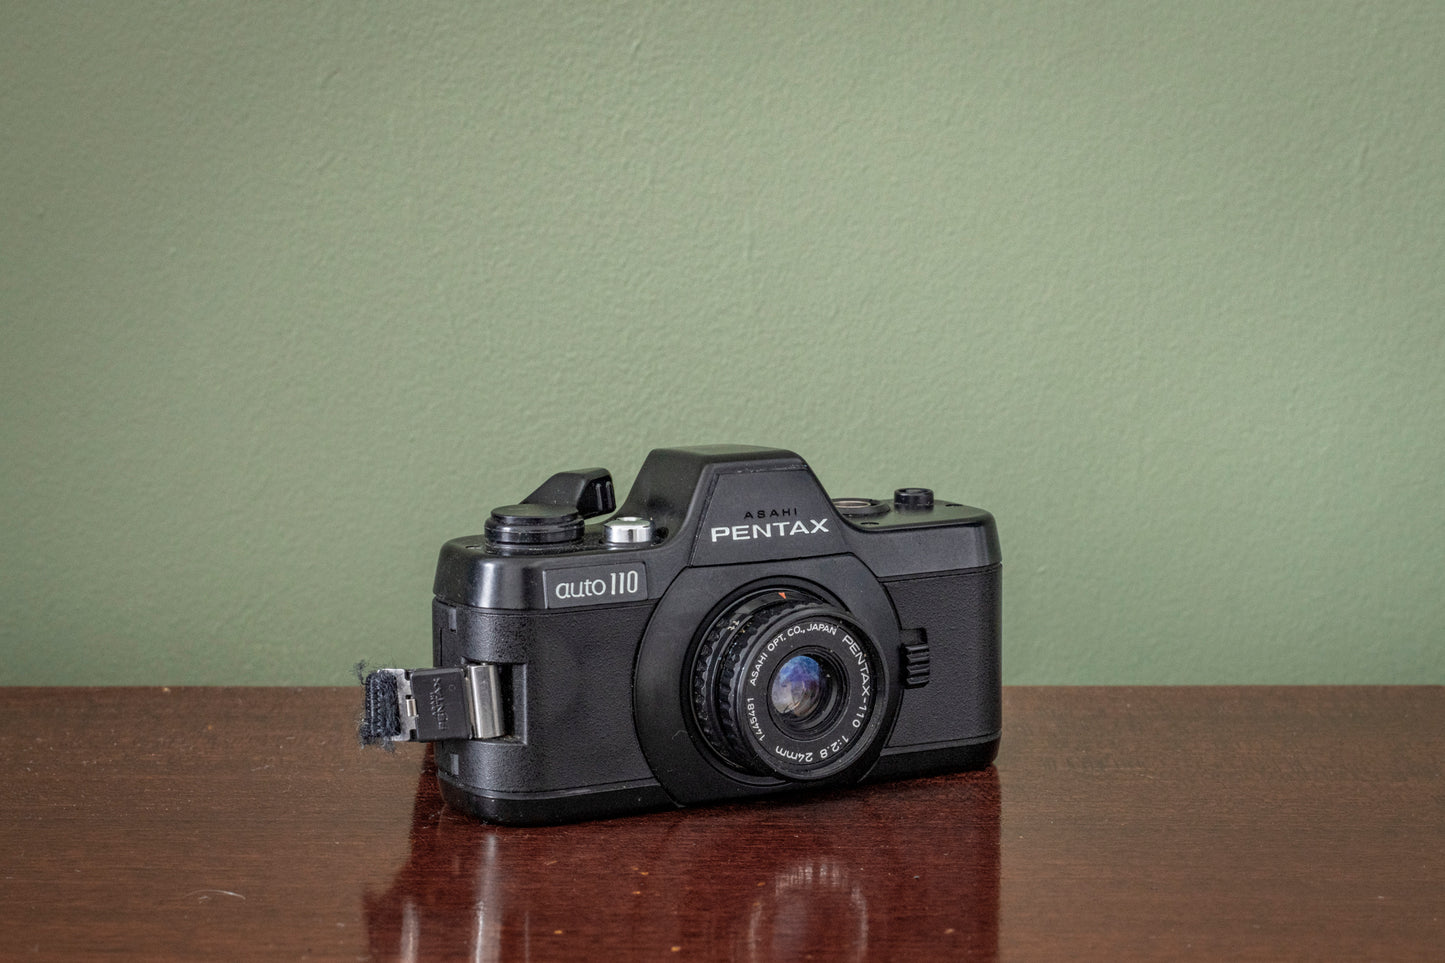 Pentax Auto 110mm Film Camera with Pentax 24mm F2.8 Lens